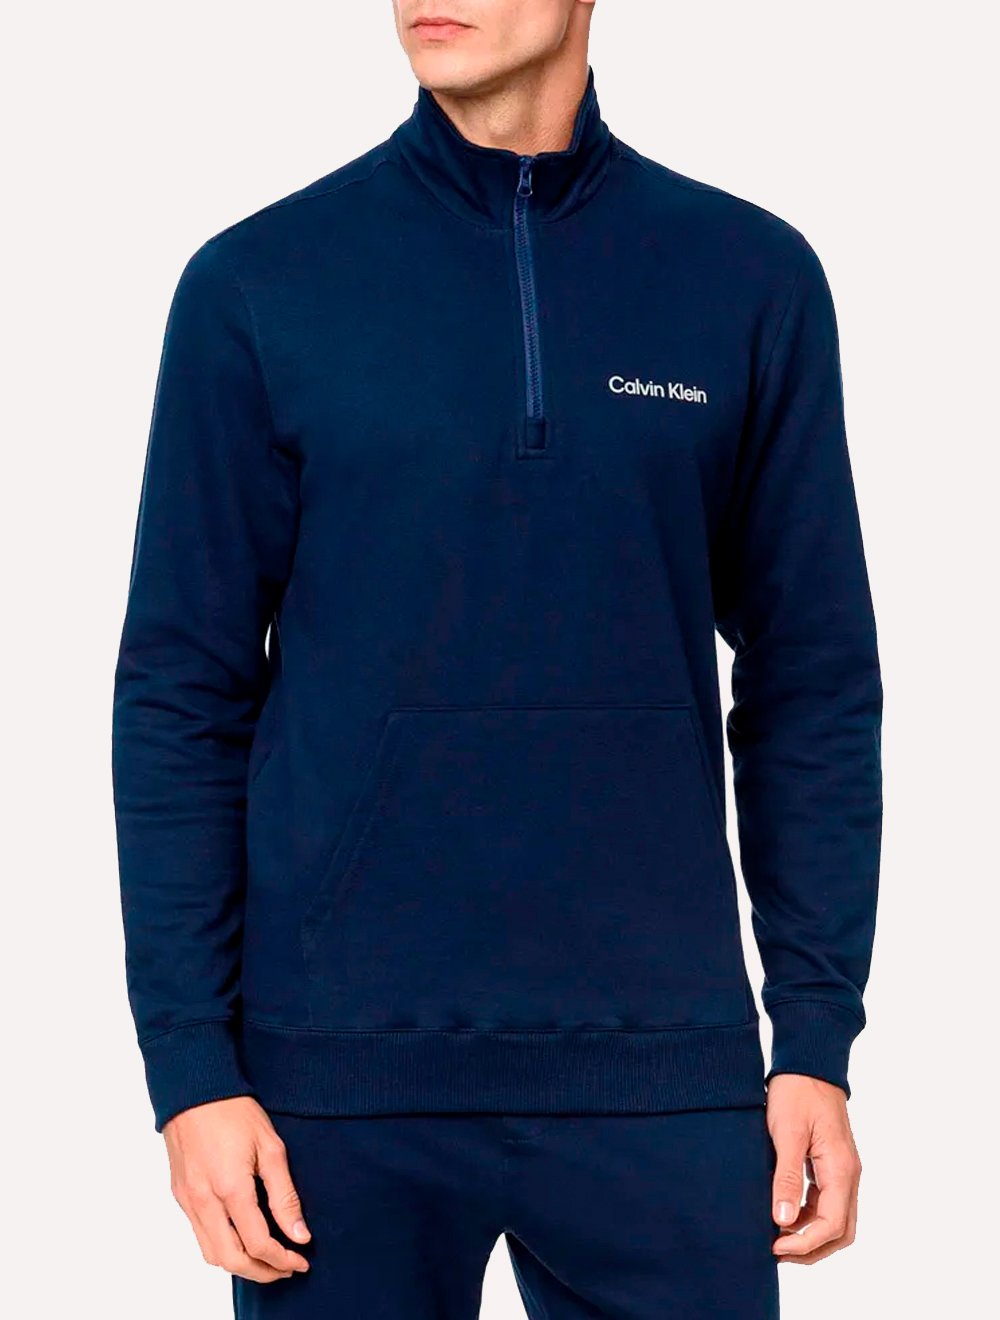 Moletom Calvin Klein Loungewear Masculino Half Zip Modern Logo Azul Marinho